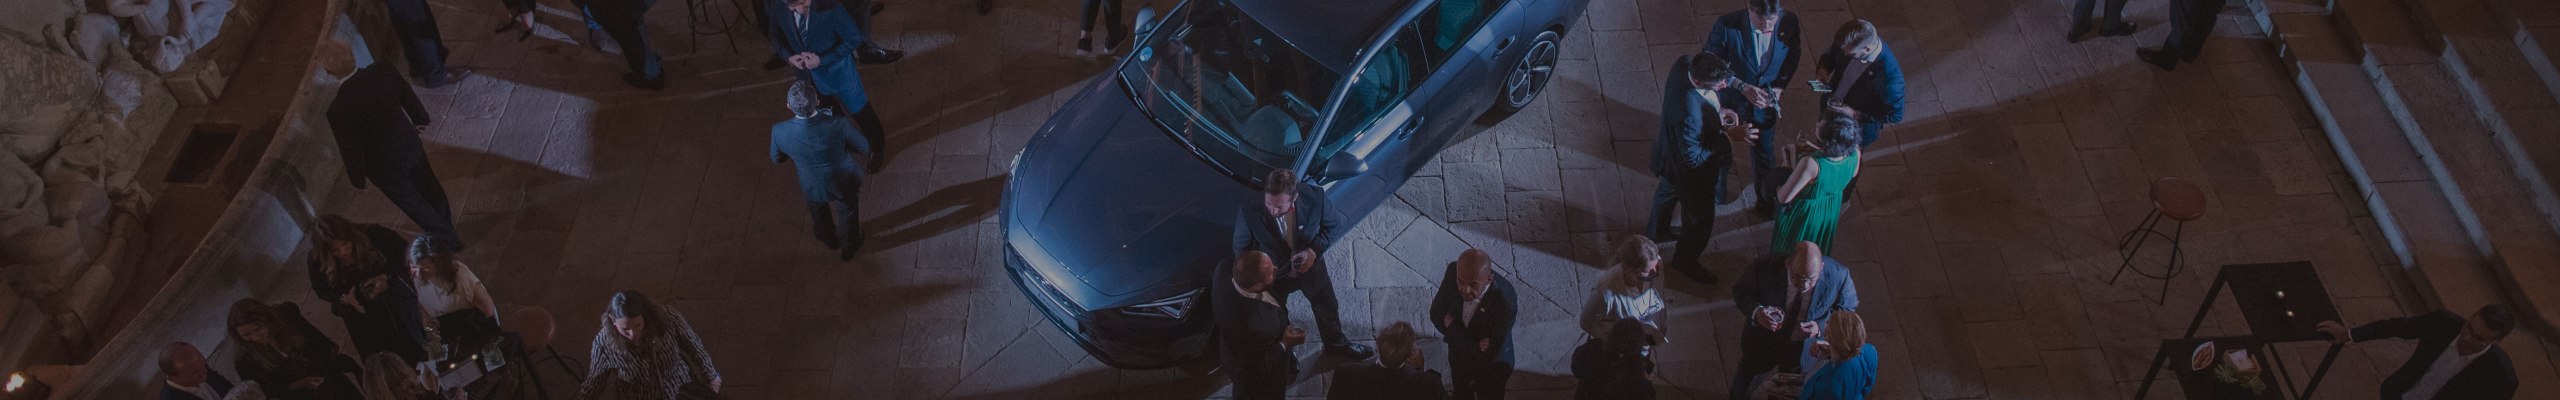 SEAT Leon riceve il premio “Best Buy Car Europa 2021” nel Gala AUTOBEST